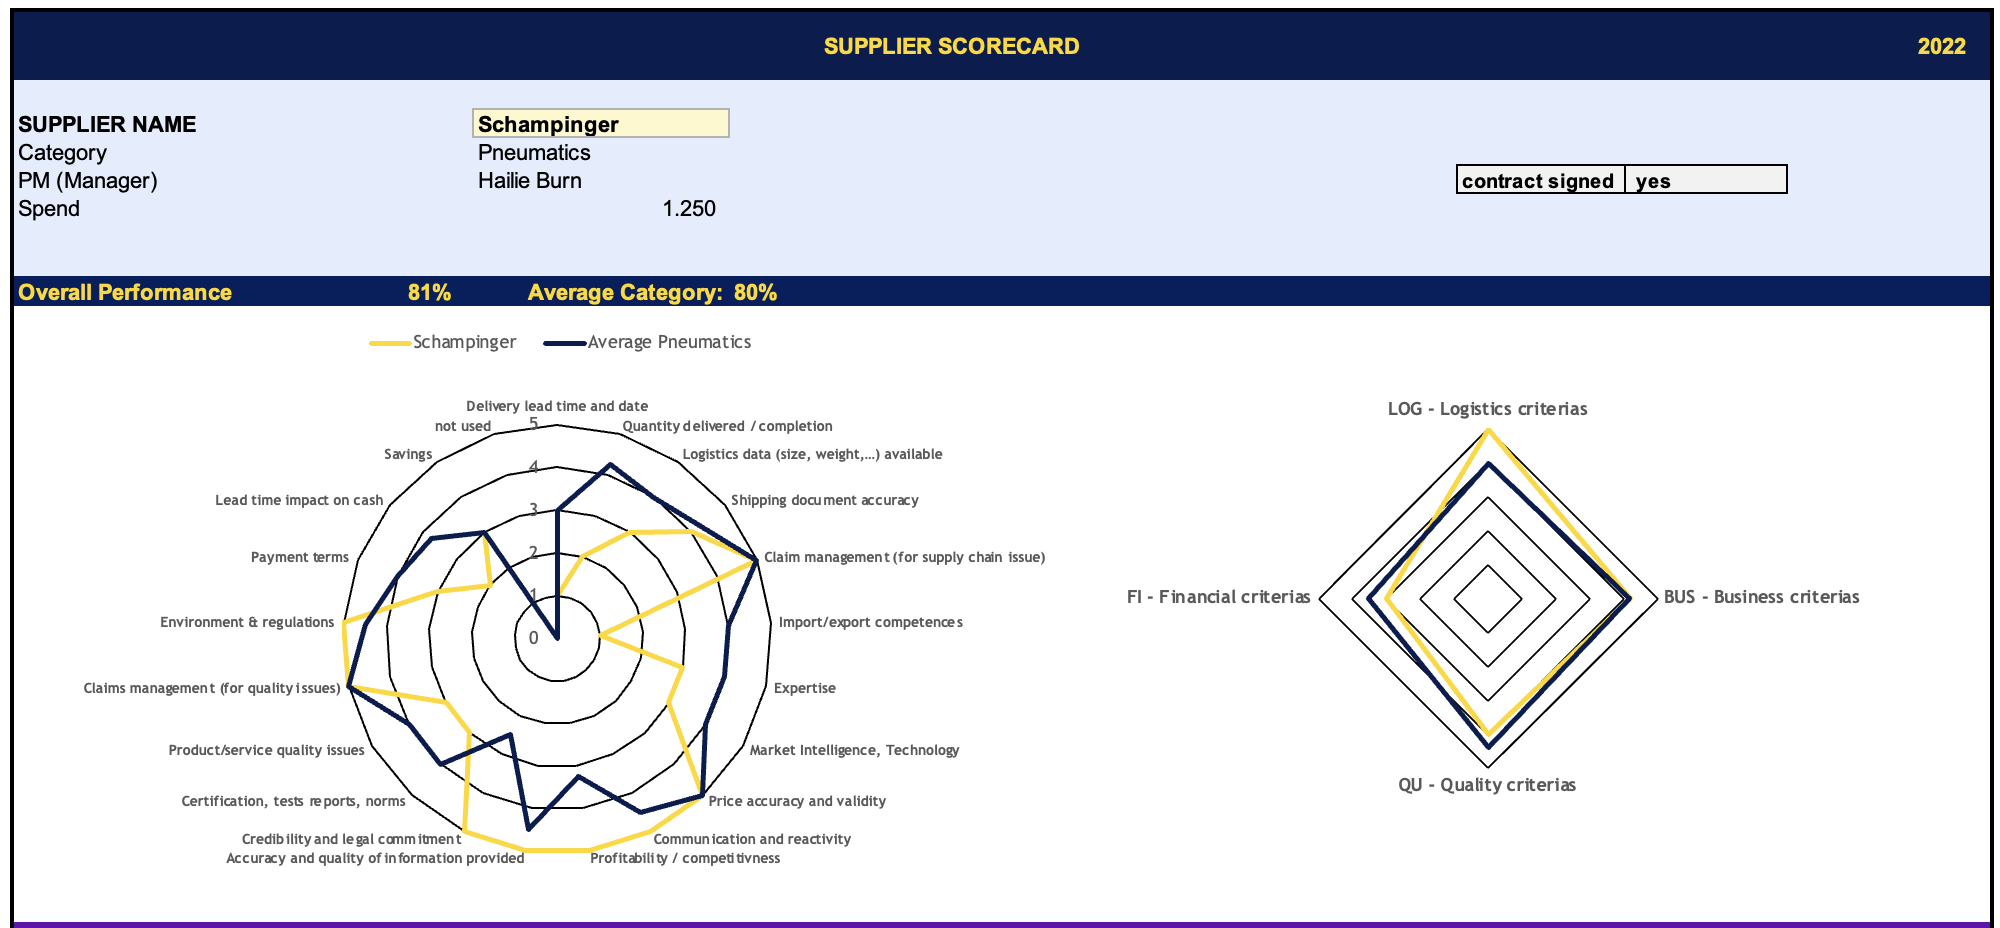 supplier assessment scorecard header contains general supplier information: vendor evaluation scorecard, vendor performance scorecard and full supplier monitoring in a multi-dimentional spiderweb graph.